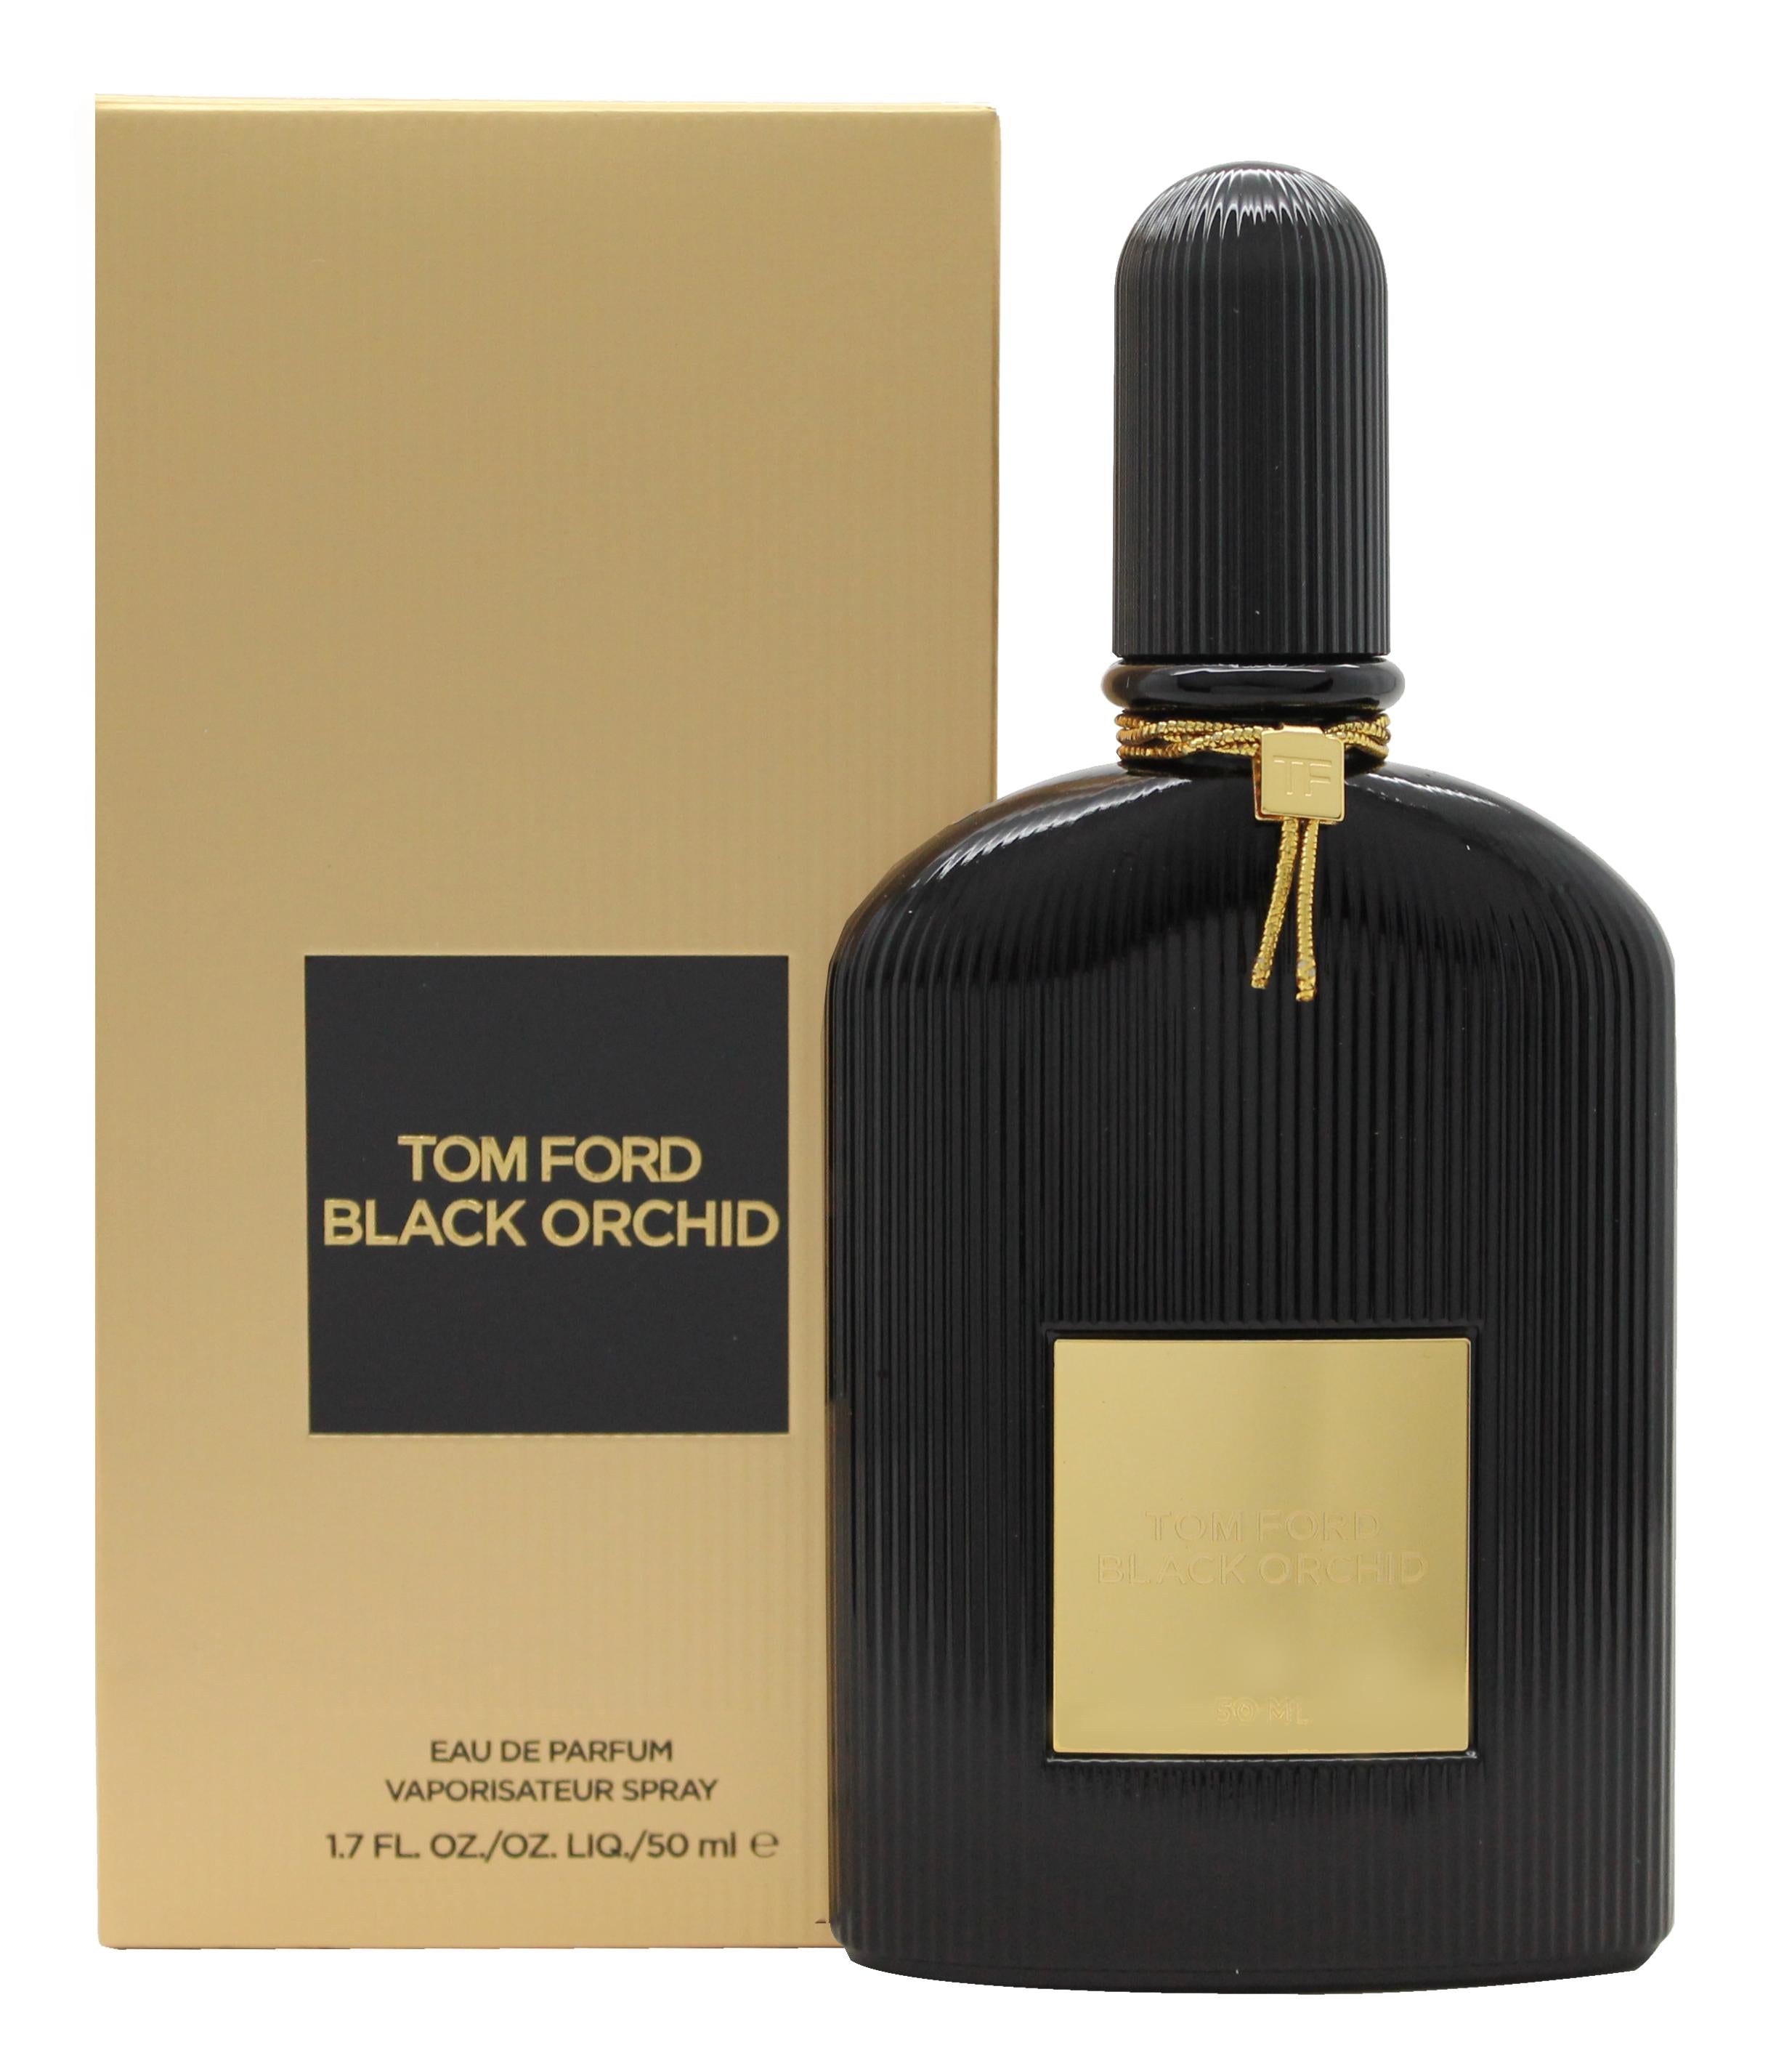 View Tom Ford Black Orchid Eau de Parfum 50ml Spray information